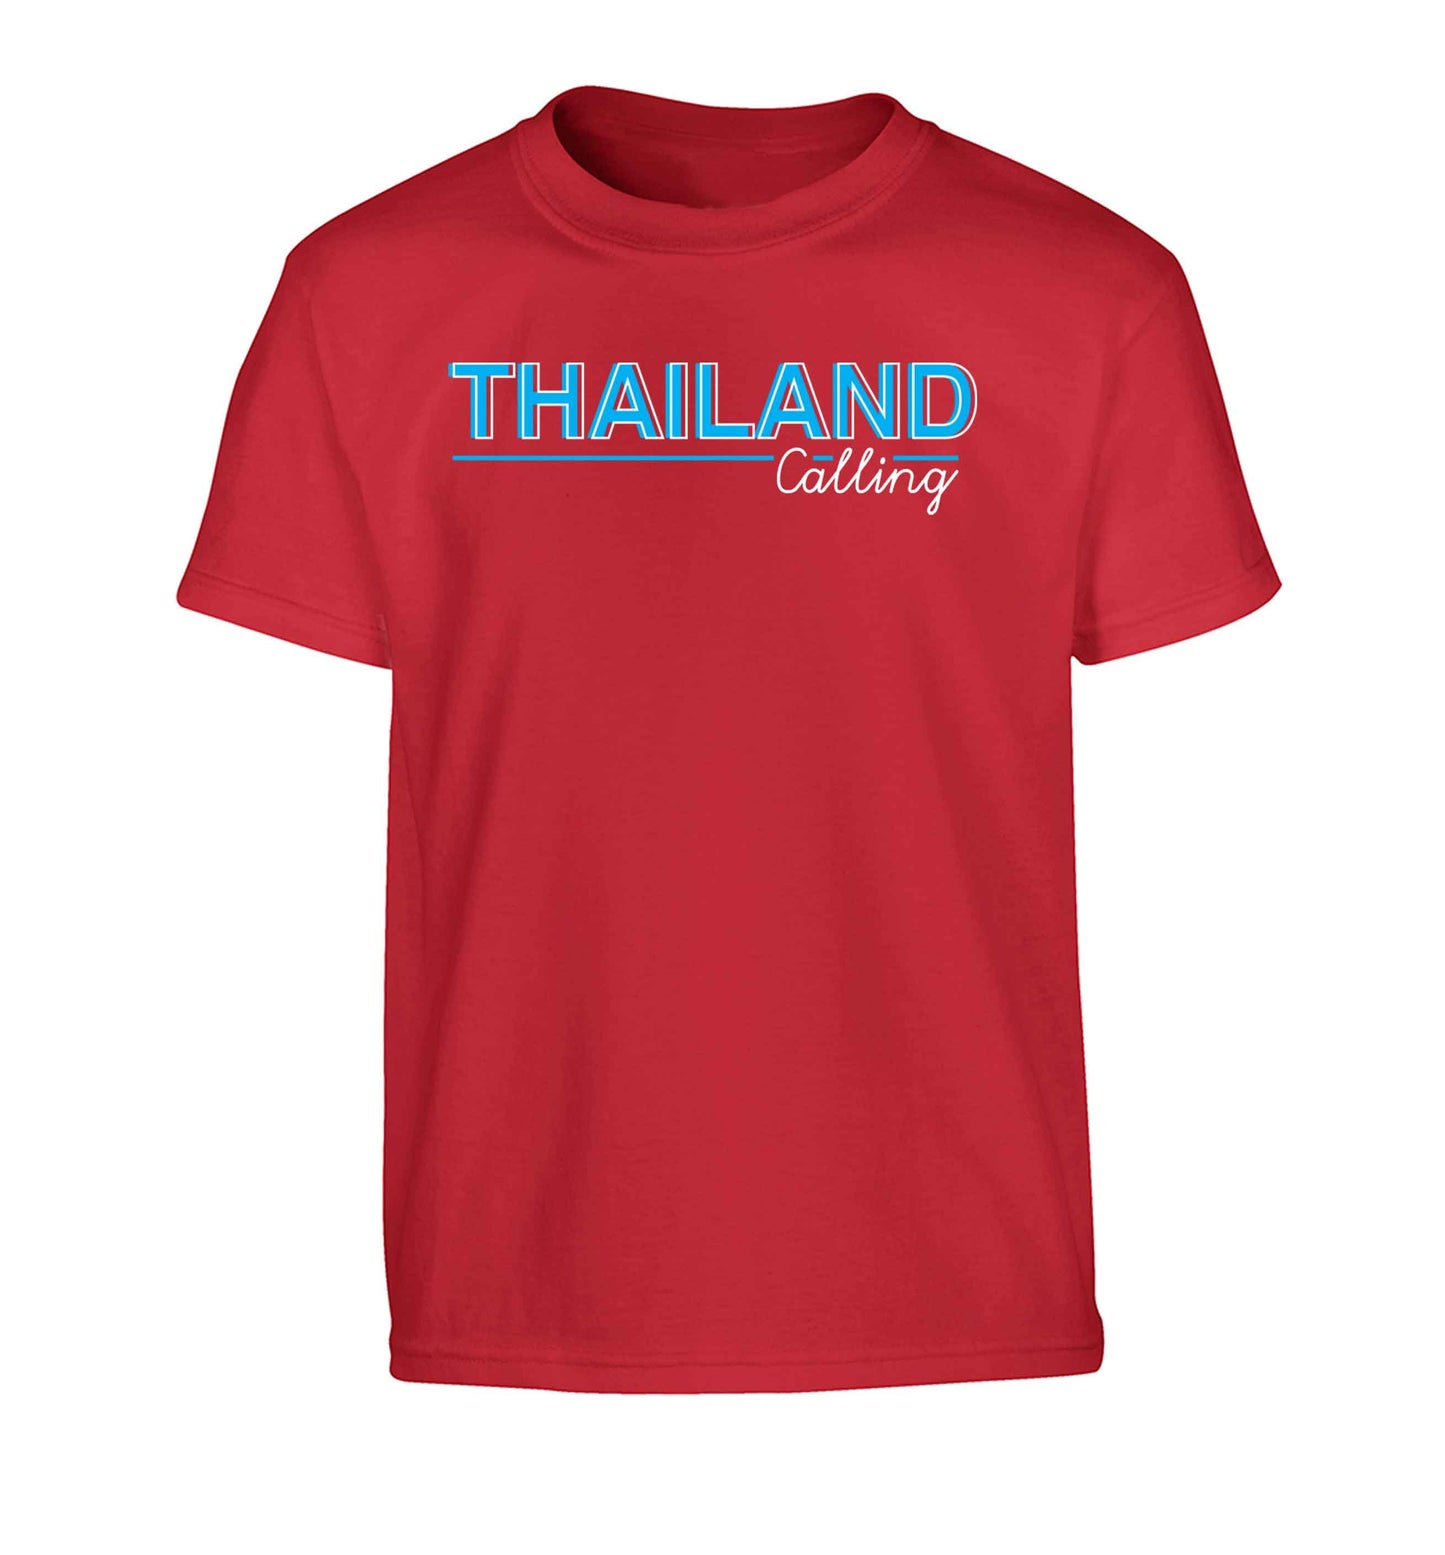 Thailand calling Children's red Tshirt 12-13 Years